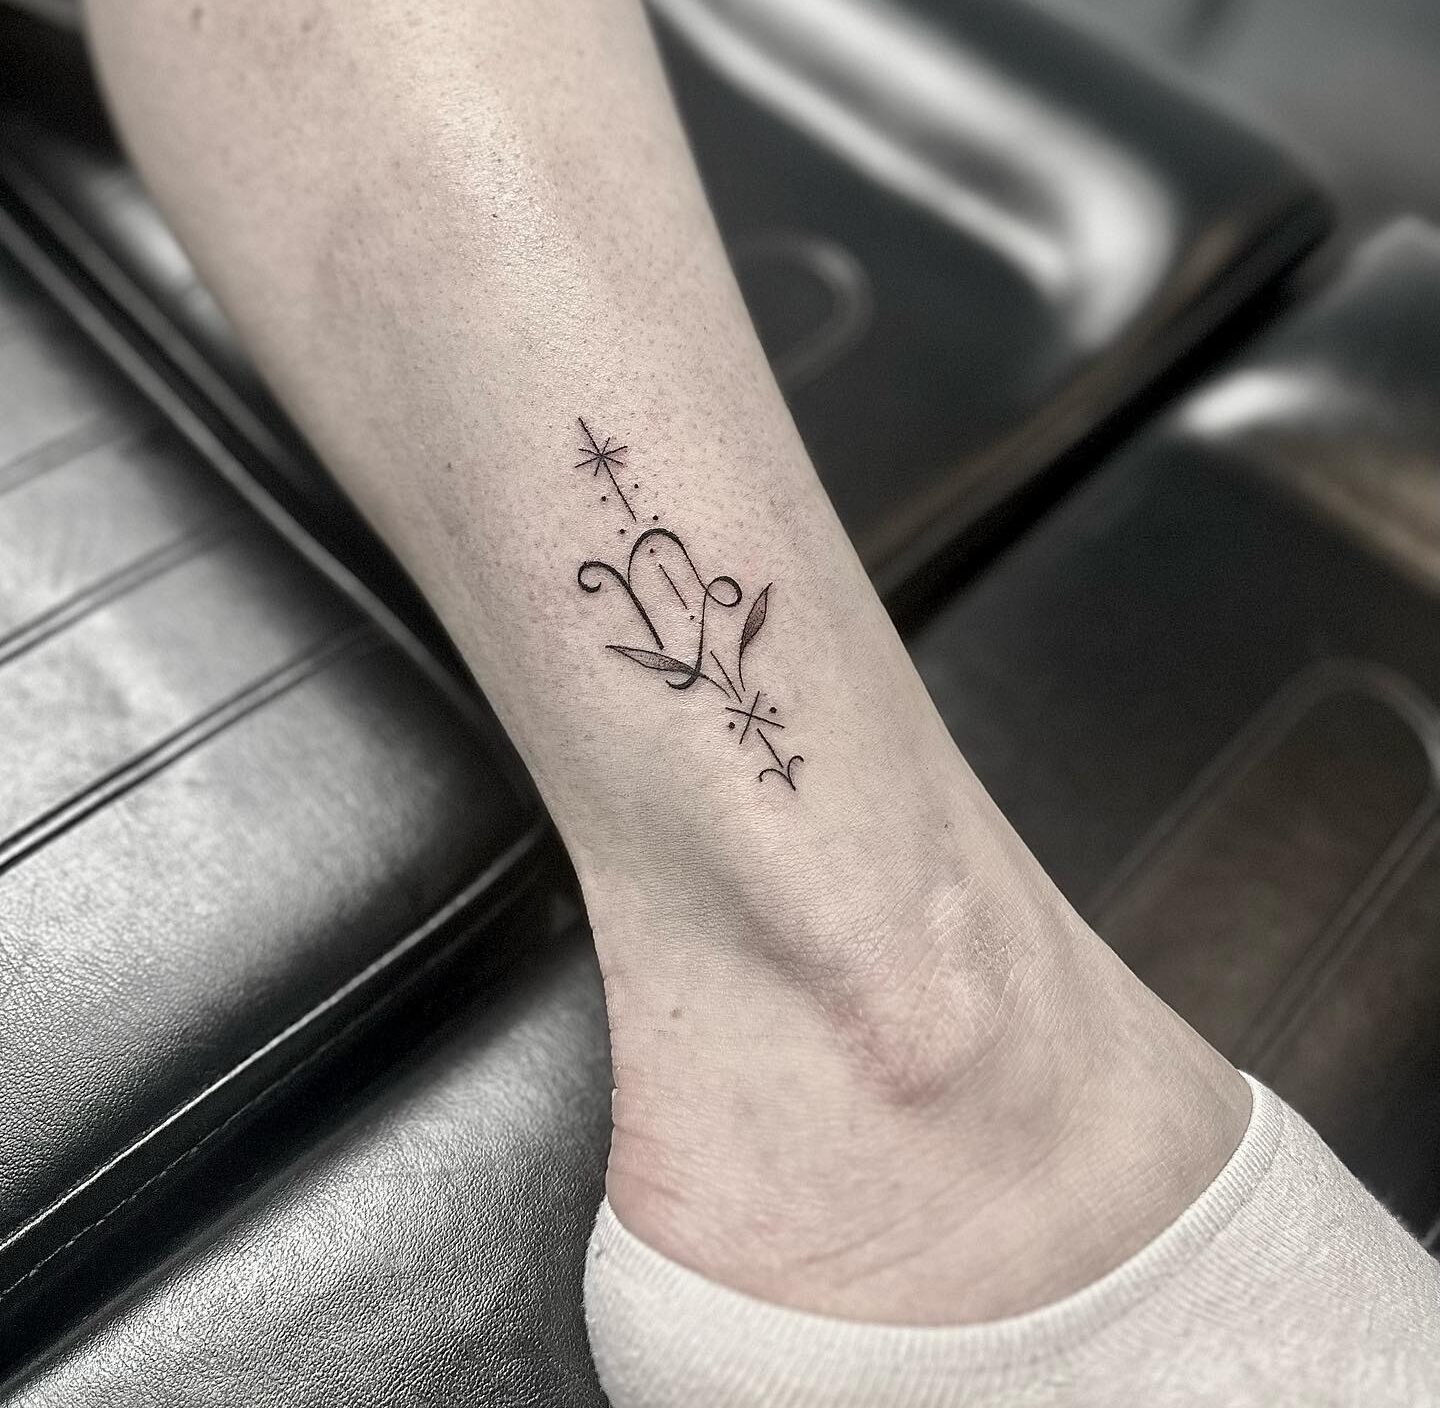 Capricorn zodiac symbol tattoo located on the ankle